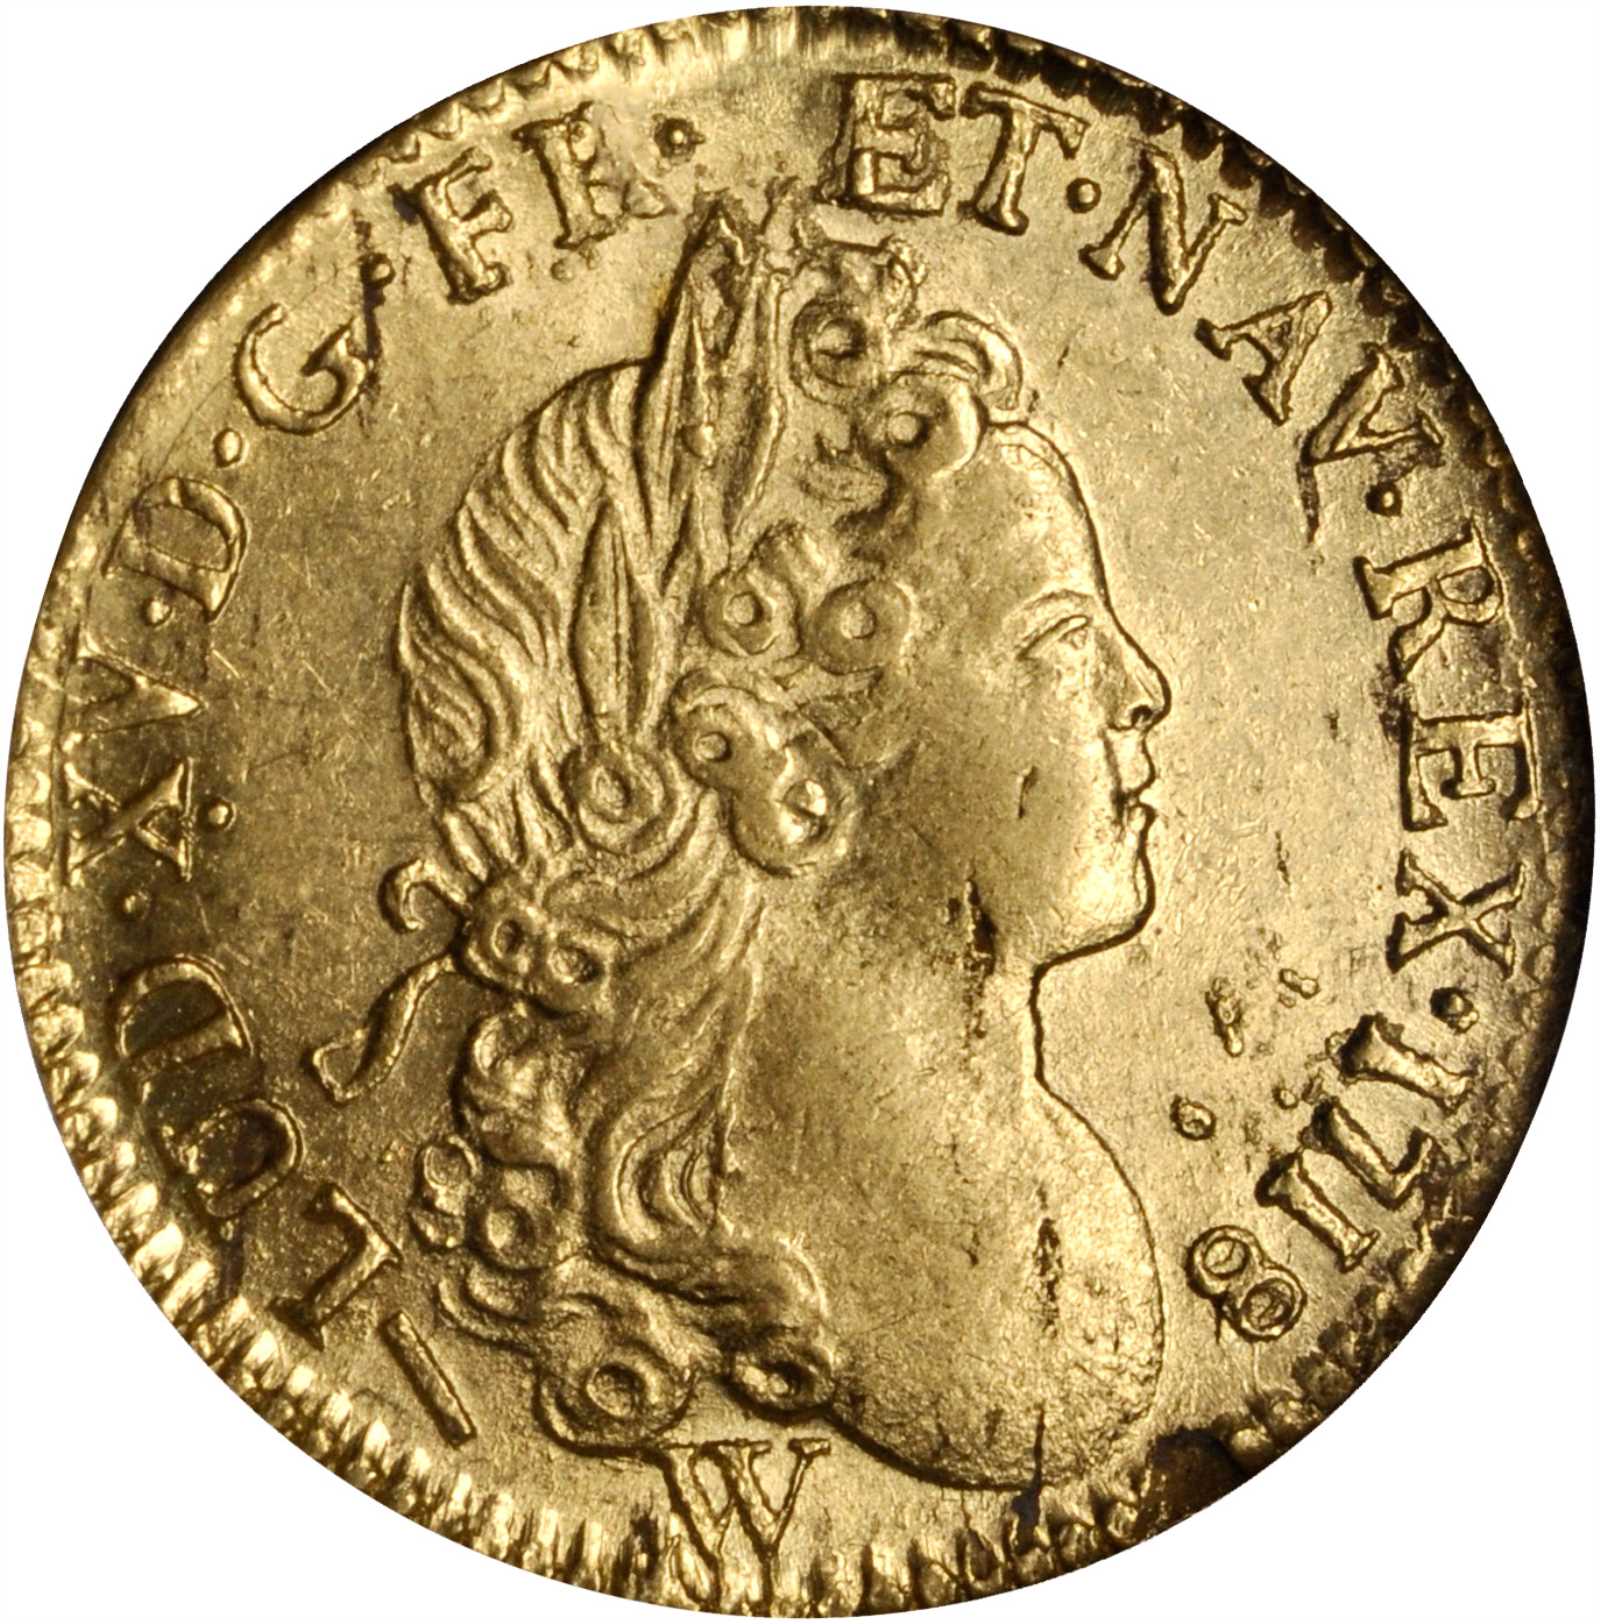 France. Louis XV. Brass token. 1715-1774 – Coins4all